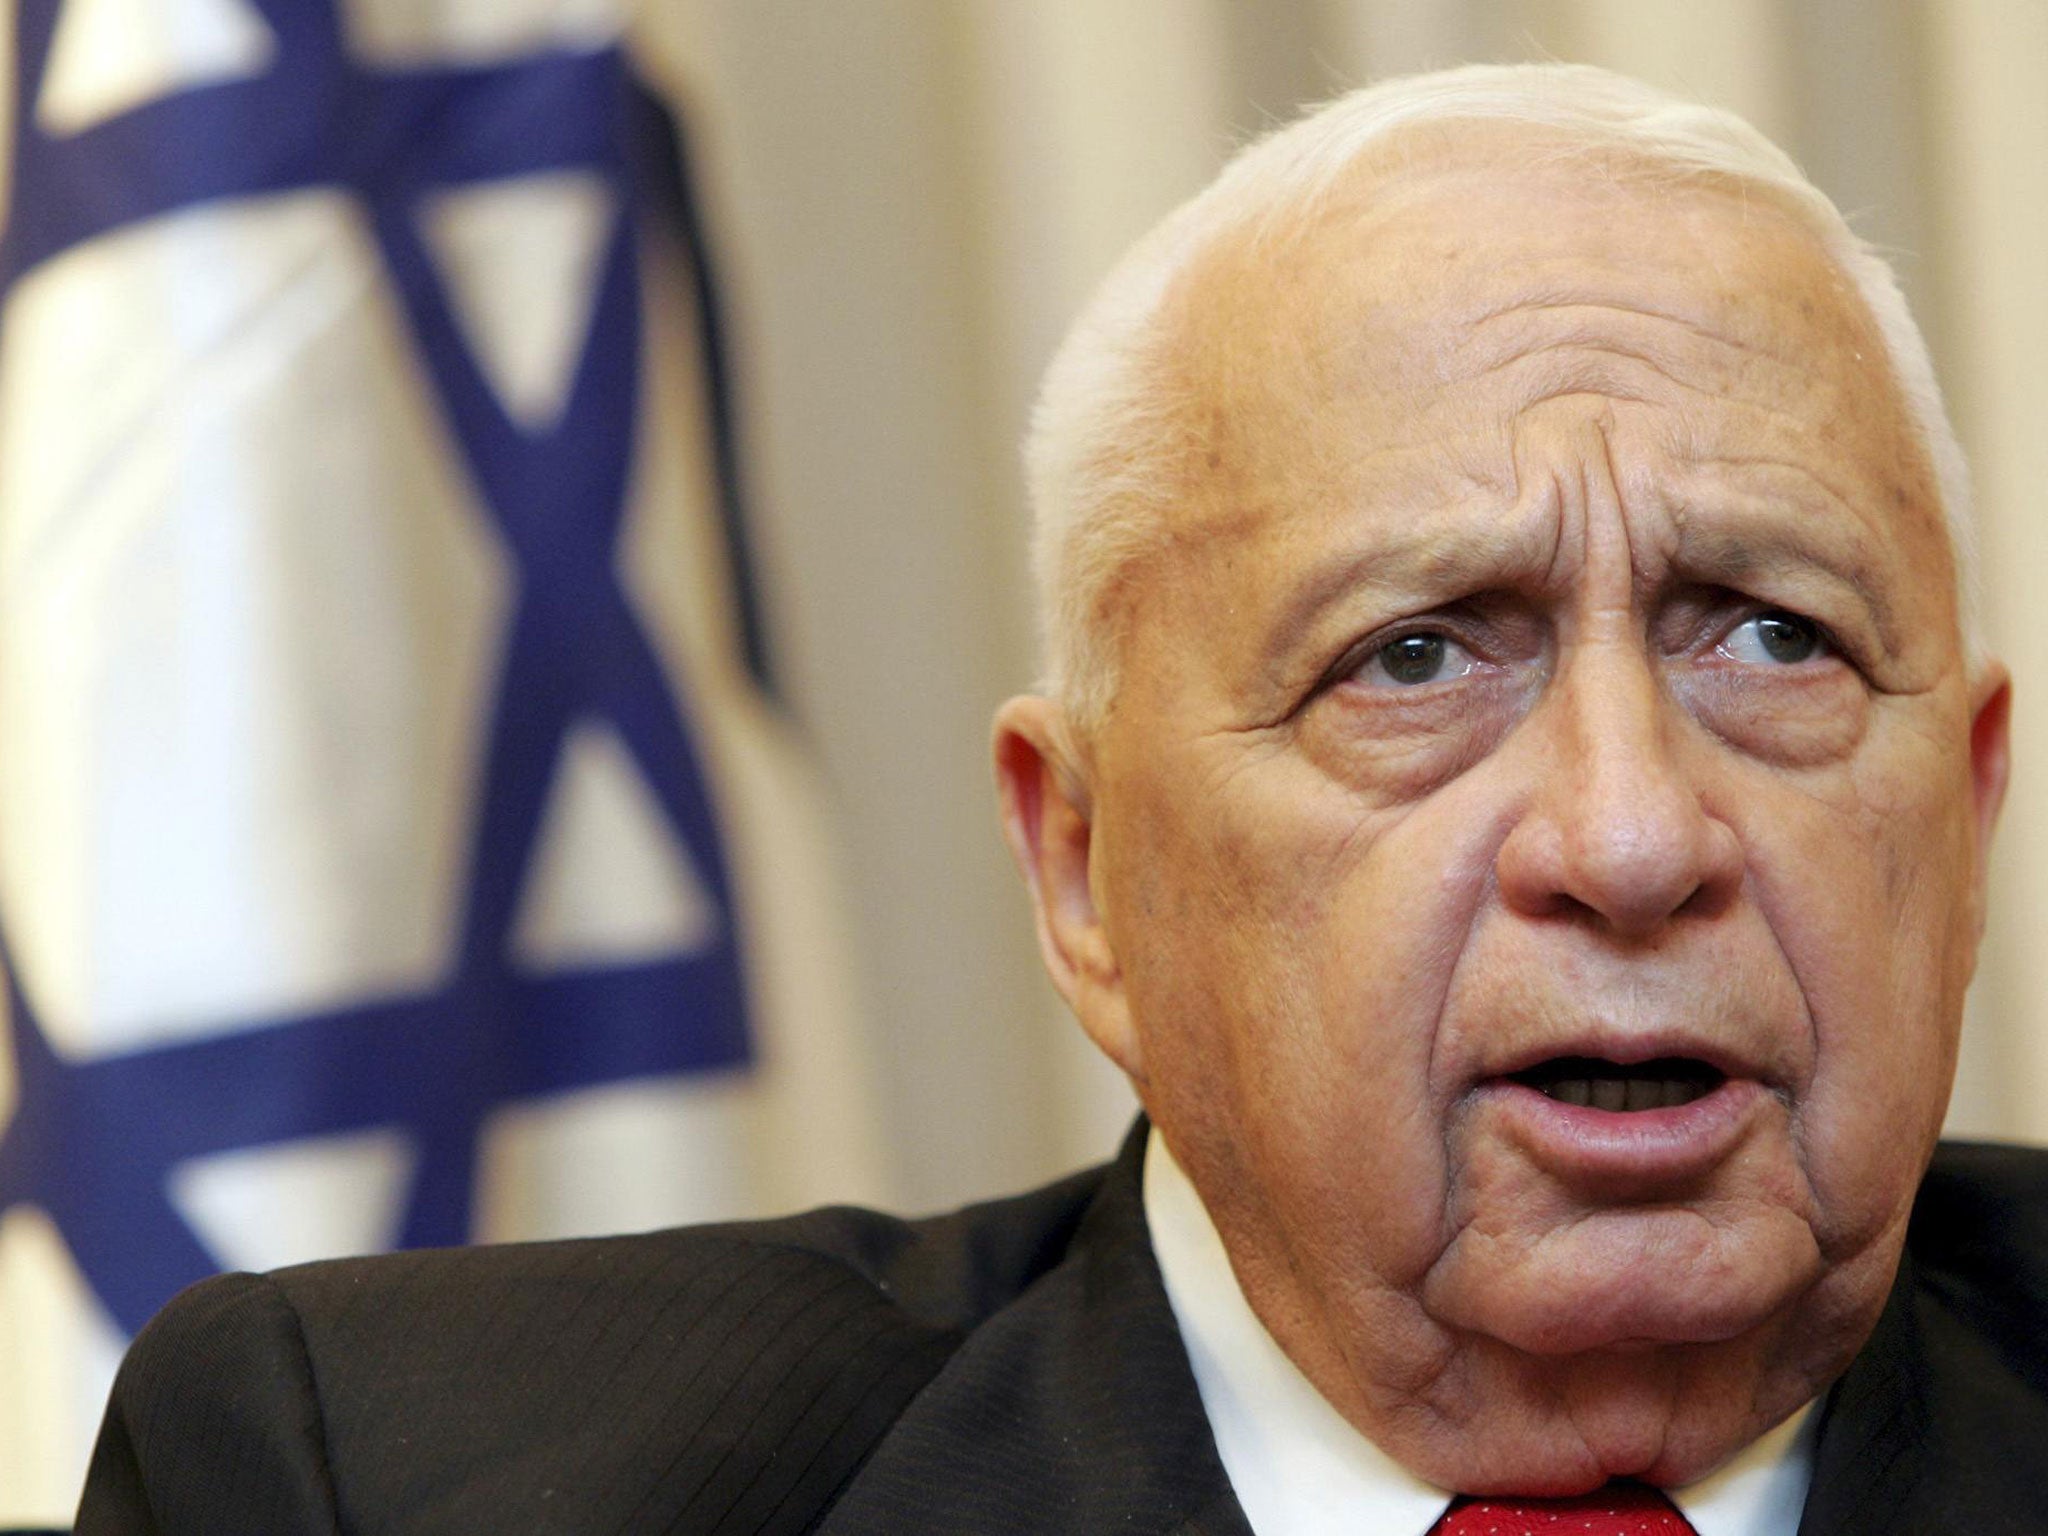 Former Israeli prime minister Ariel Sharon pictured in 2005